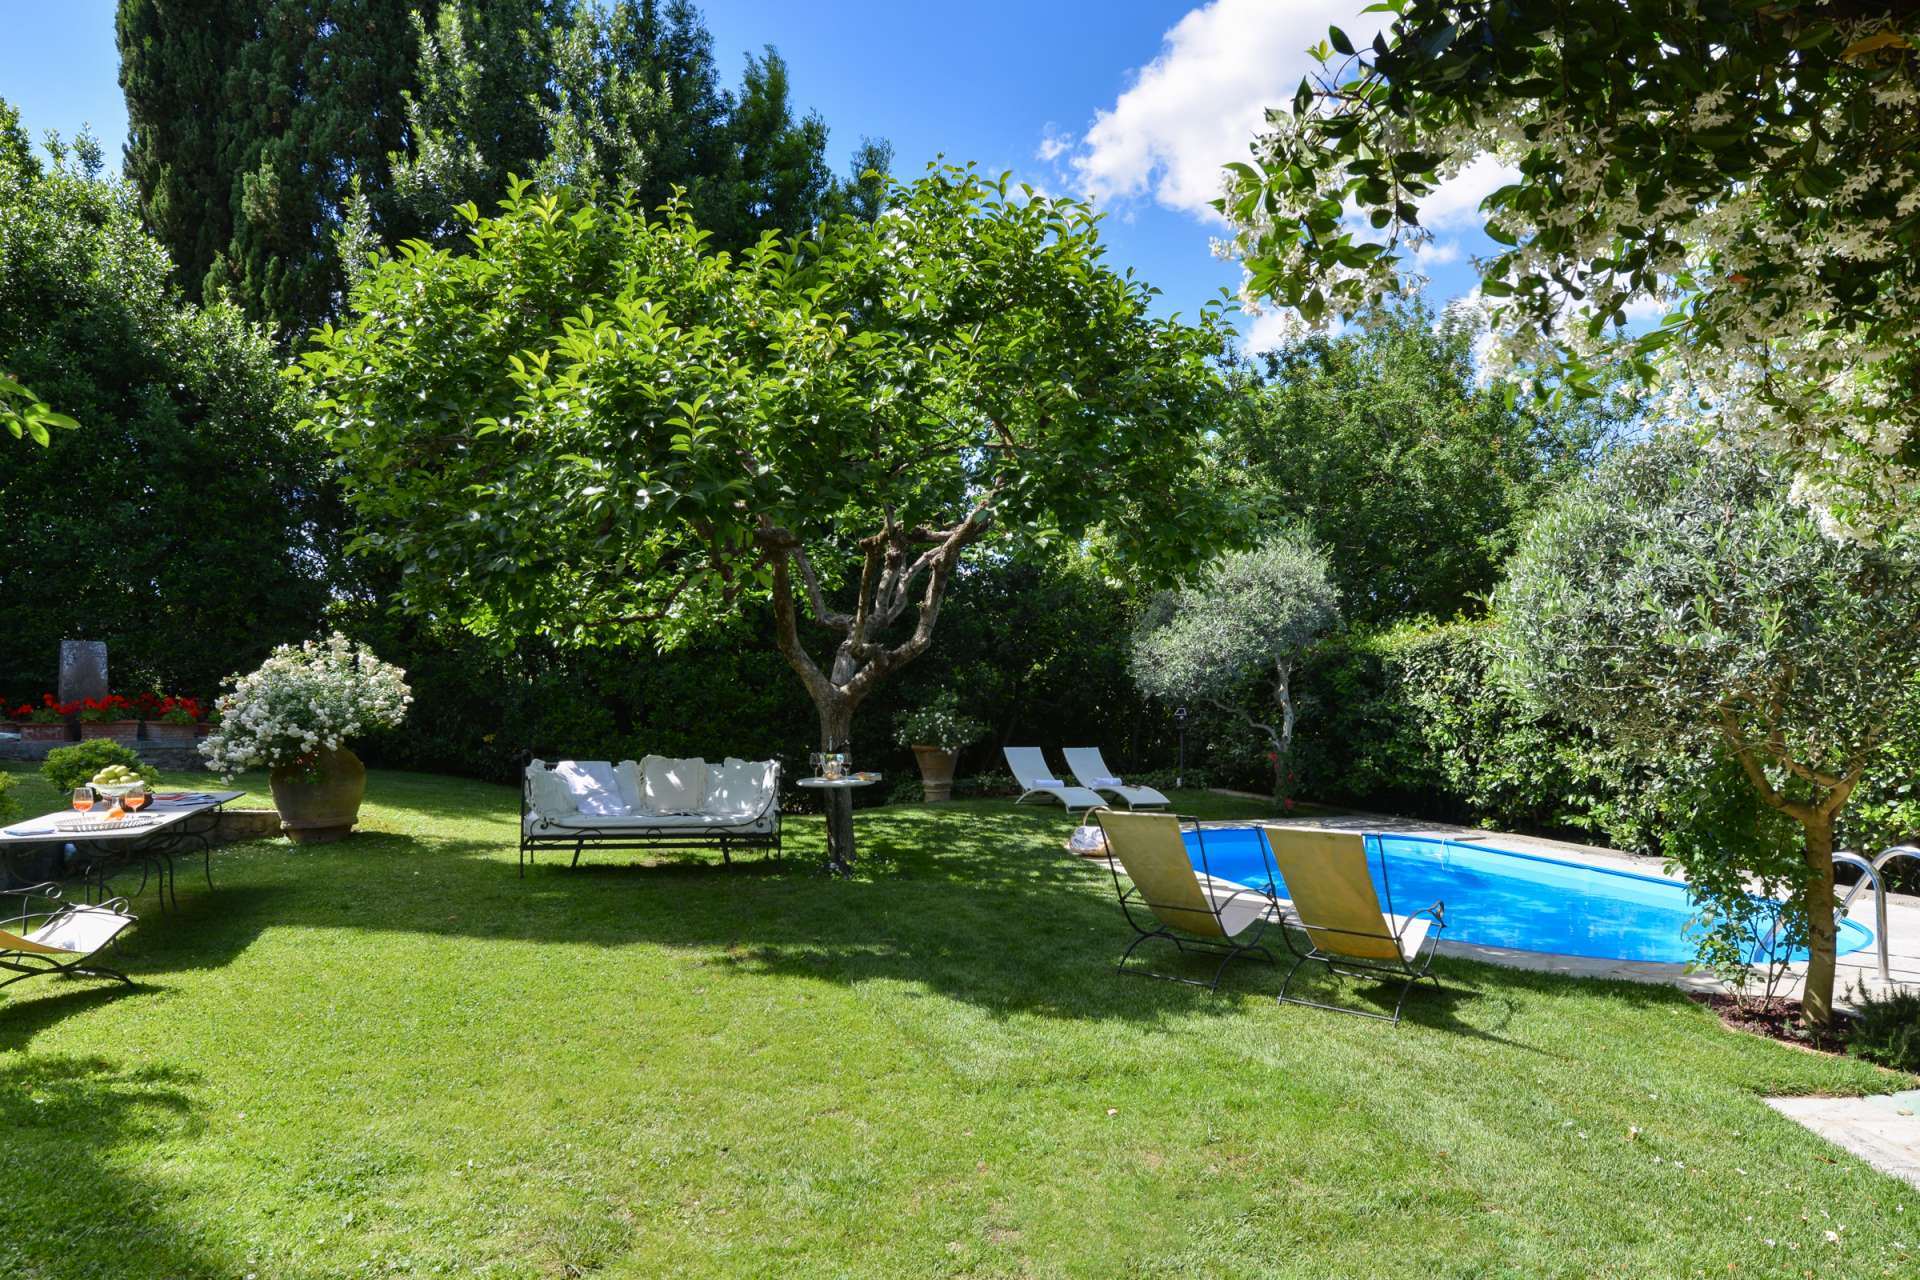 Villa San Martin | Luxury Villa with Pool | Tuscany Now & More